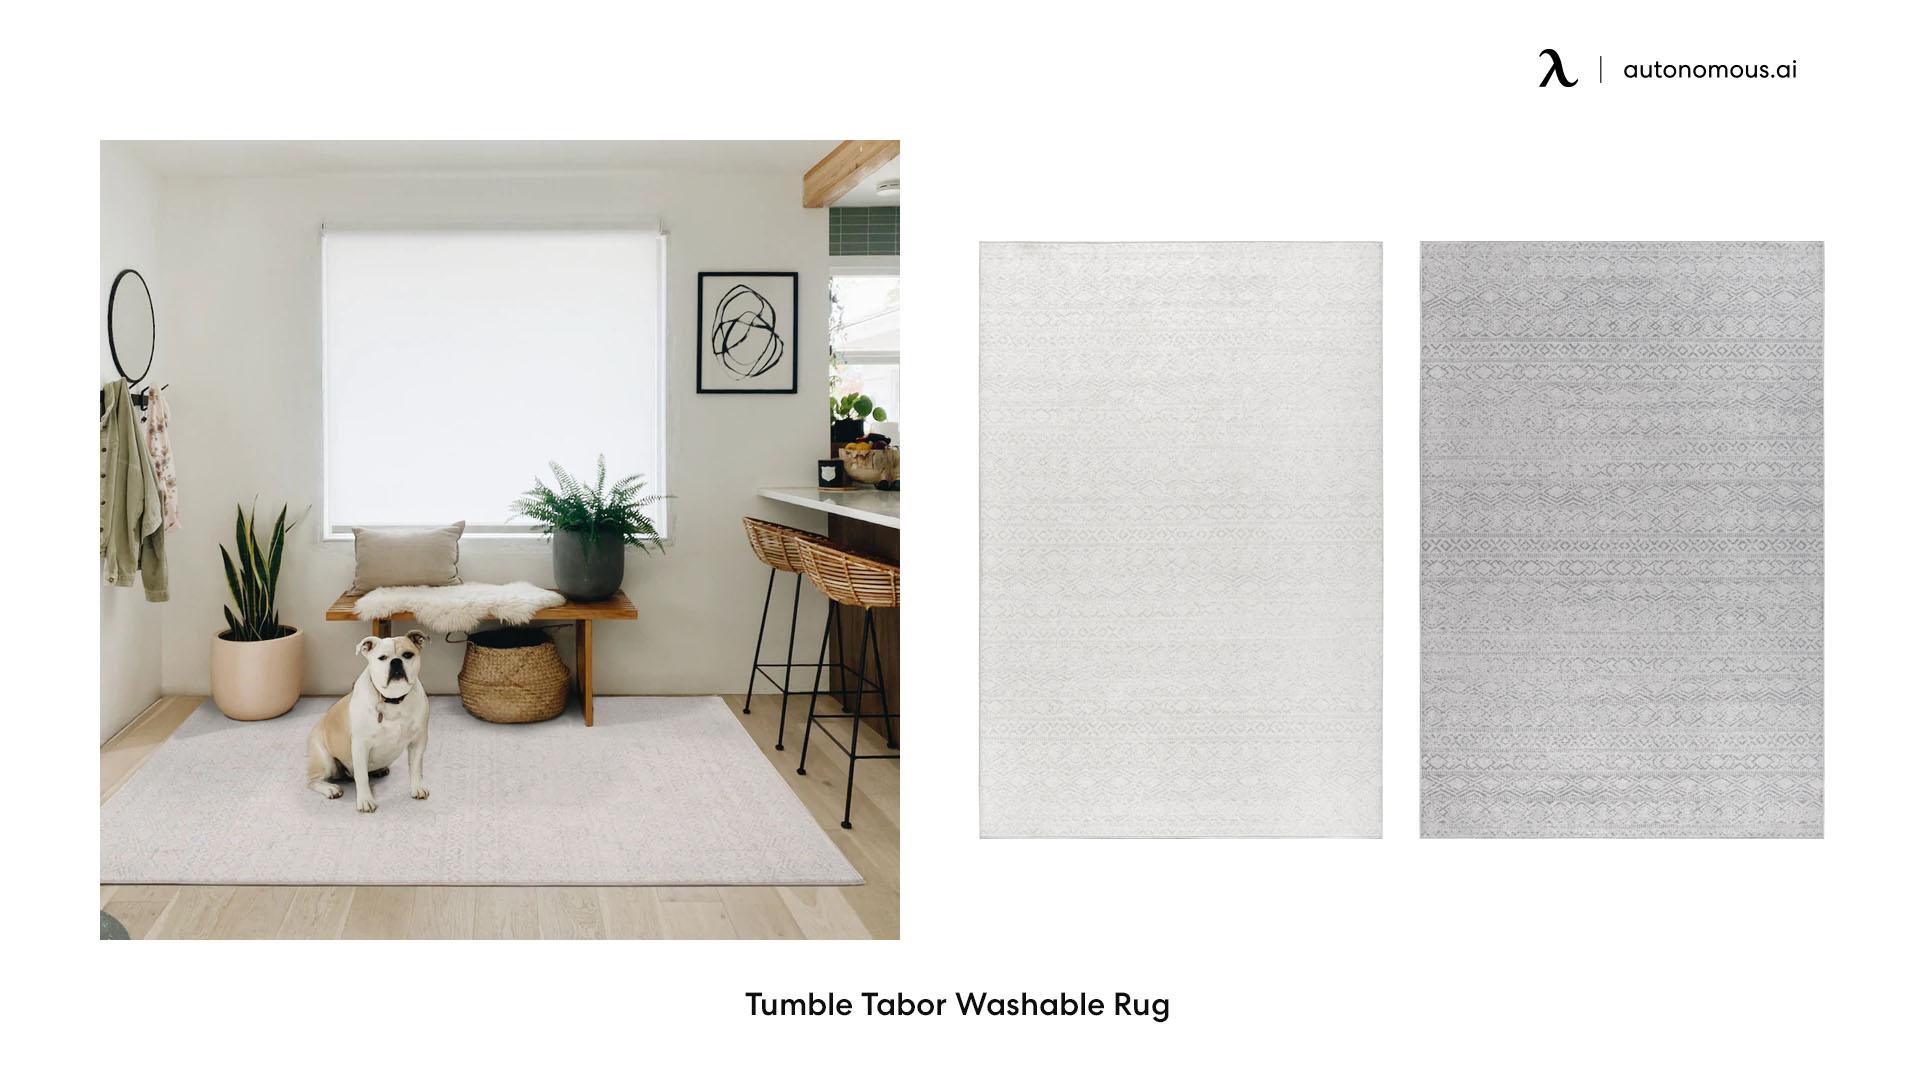 Tumble Tabor Washable desk chair rug